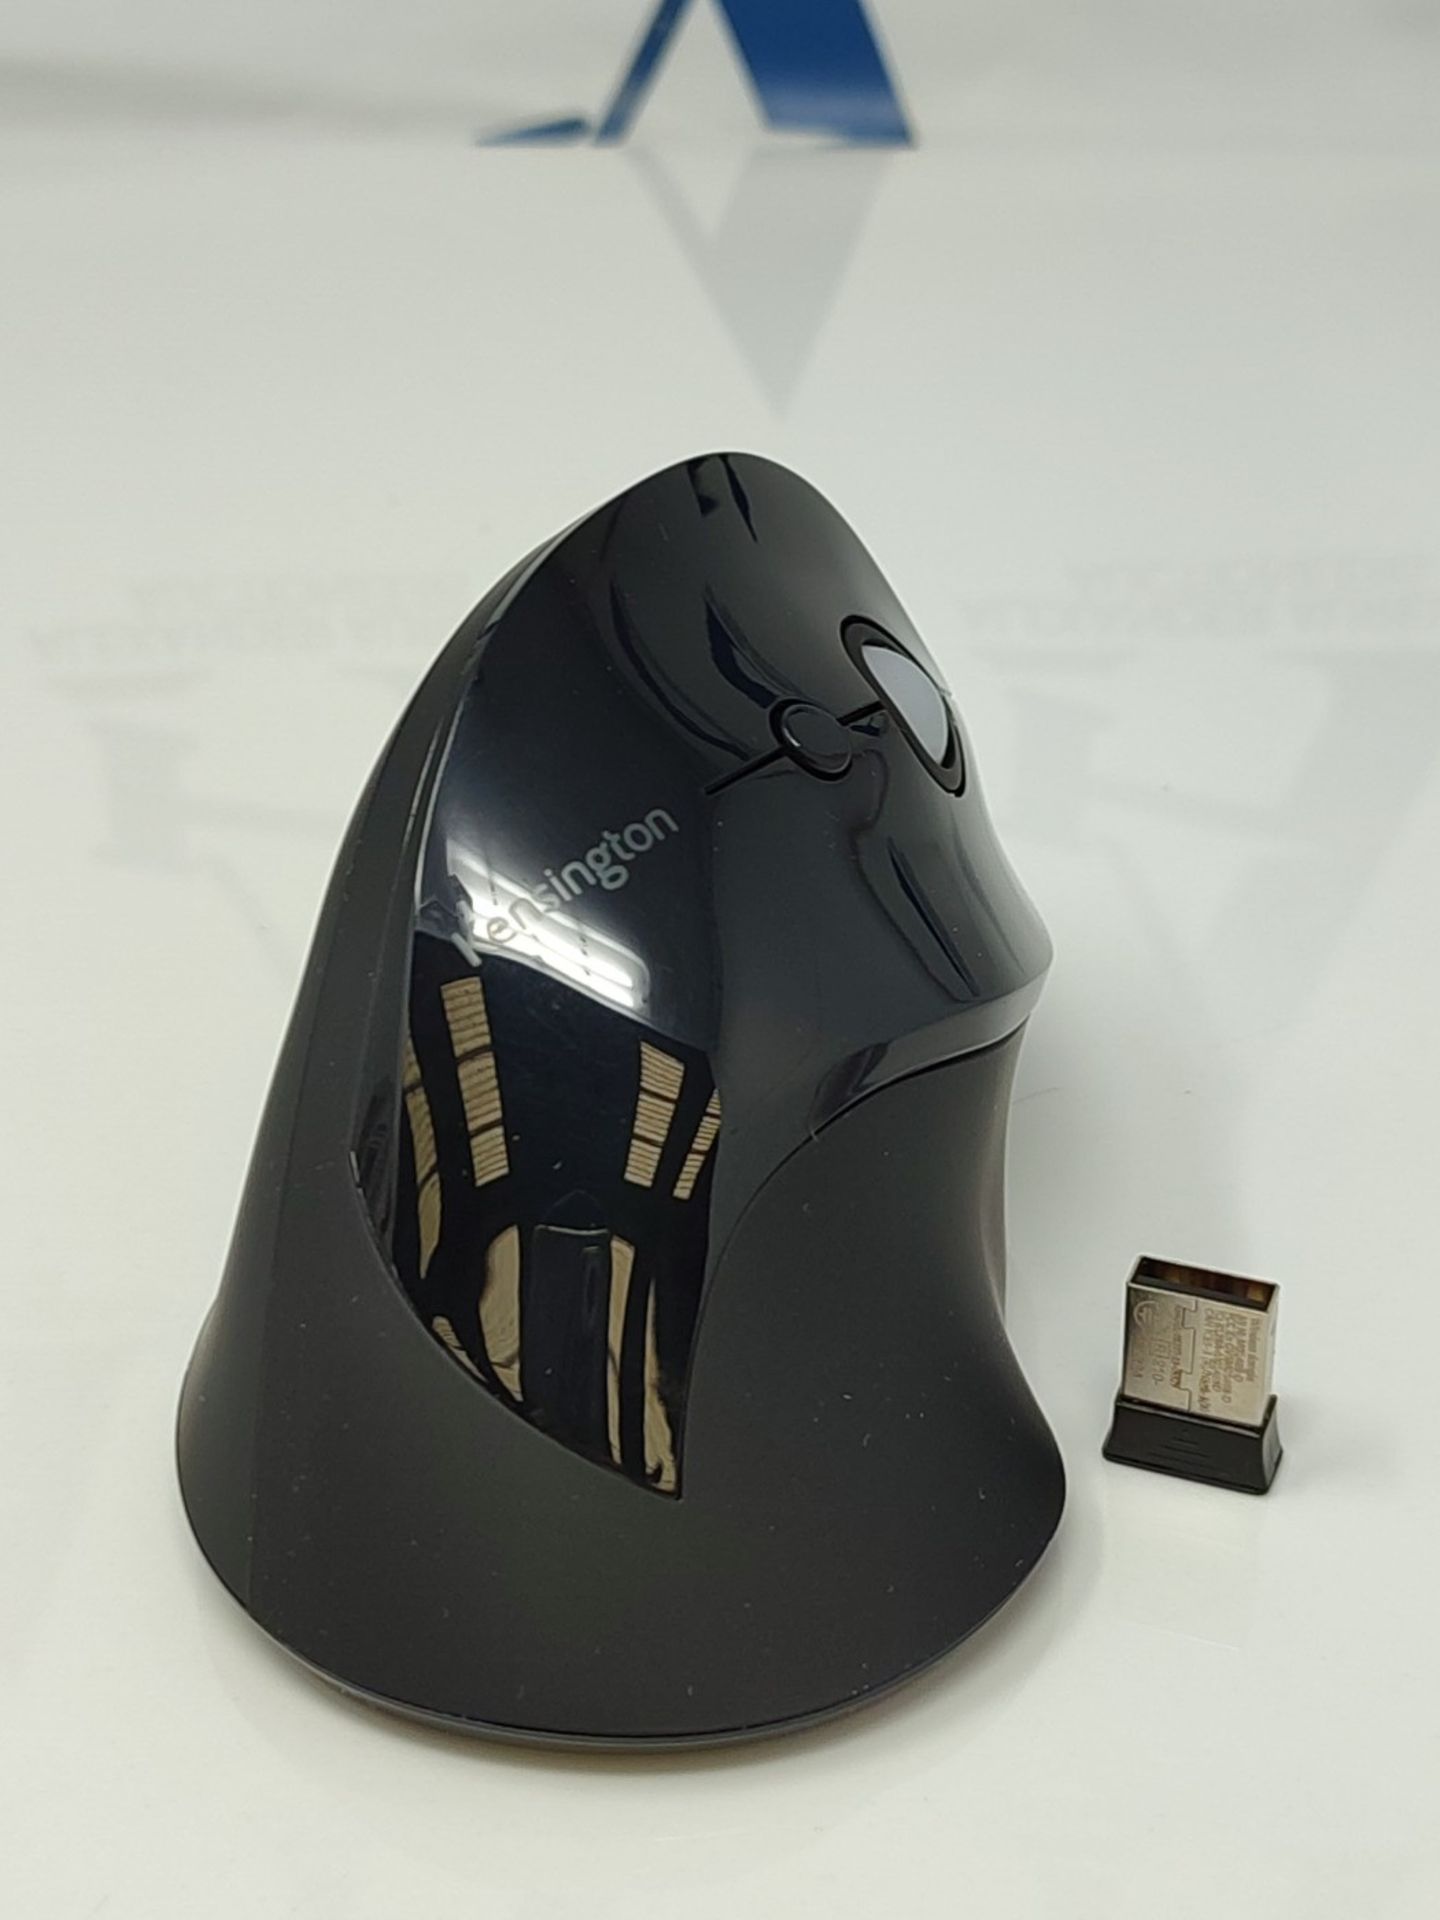 Kensington Wireless ergonomic vertical mouse, Wireless Pro Fit Ergo Vertical computer - Image 3 of 3